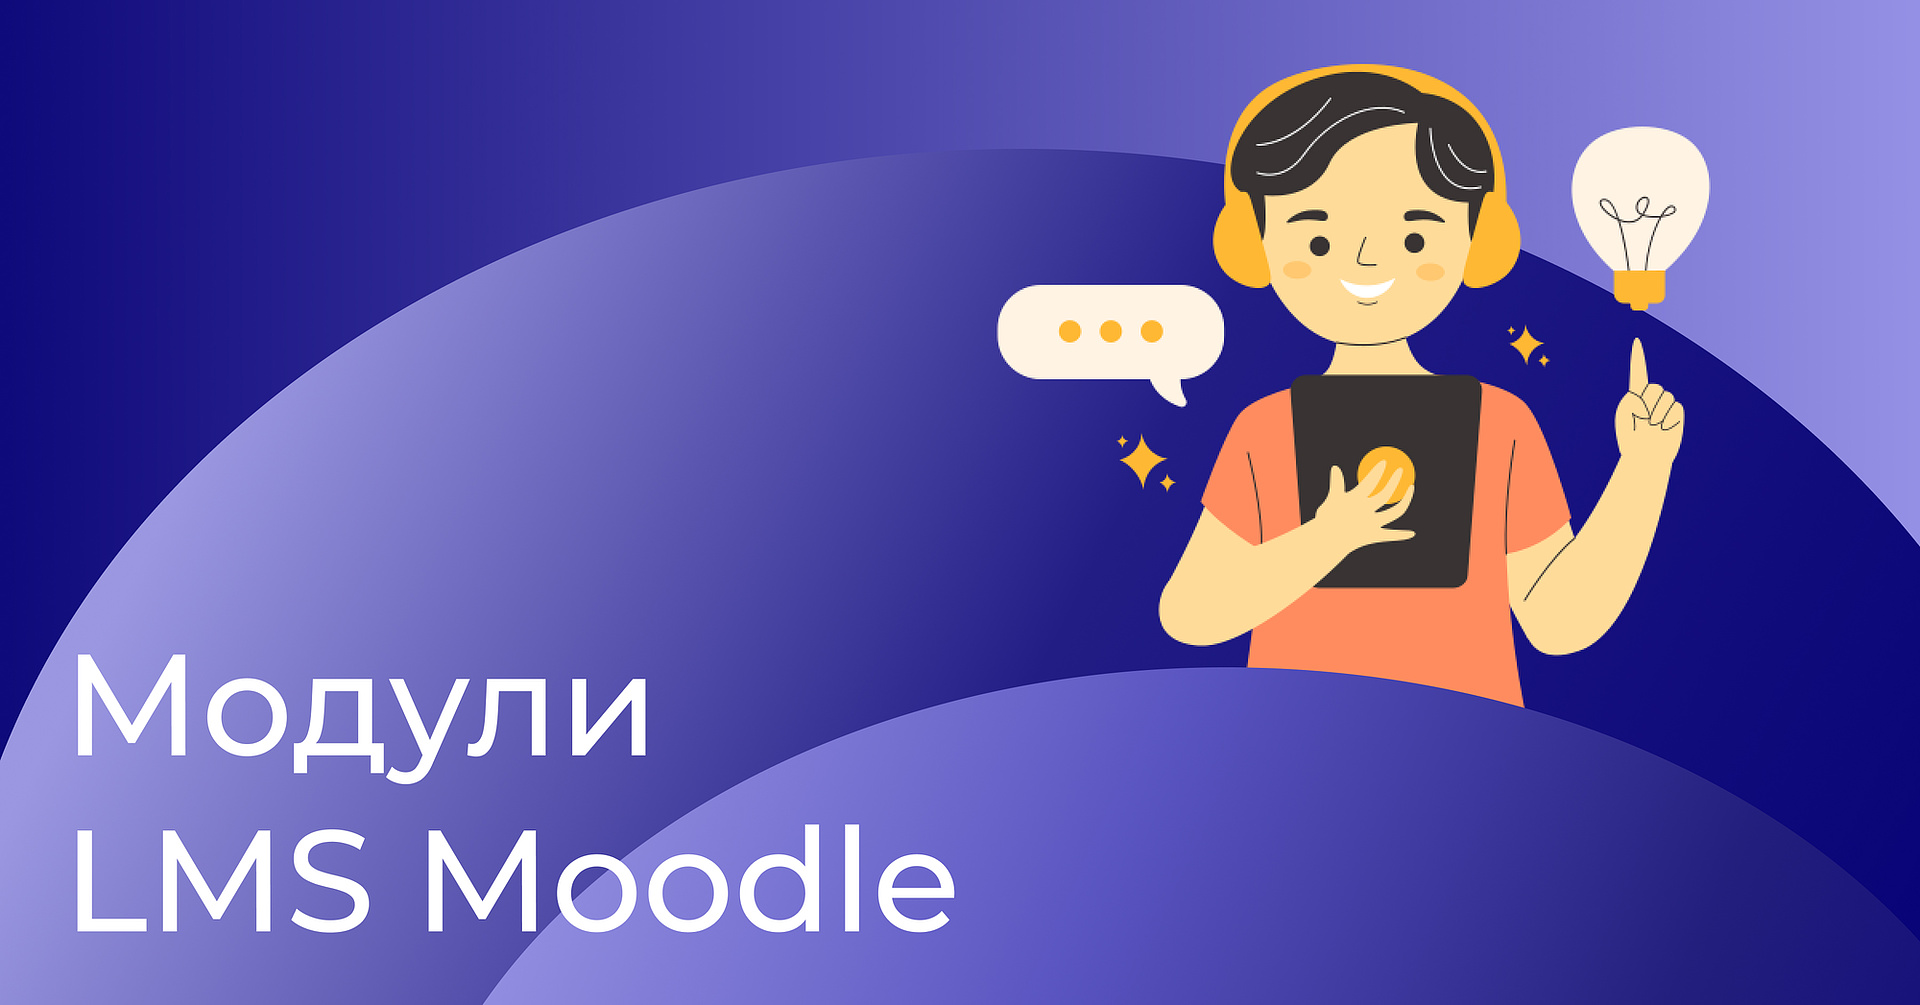 Модули Moodle